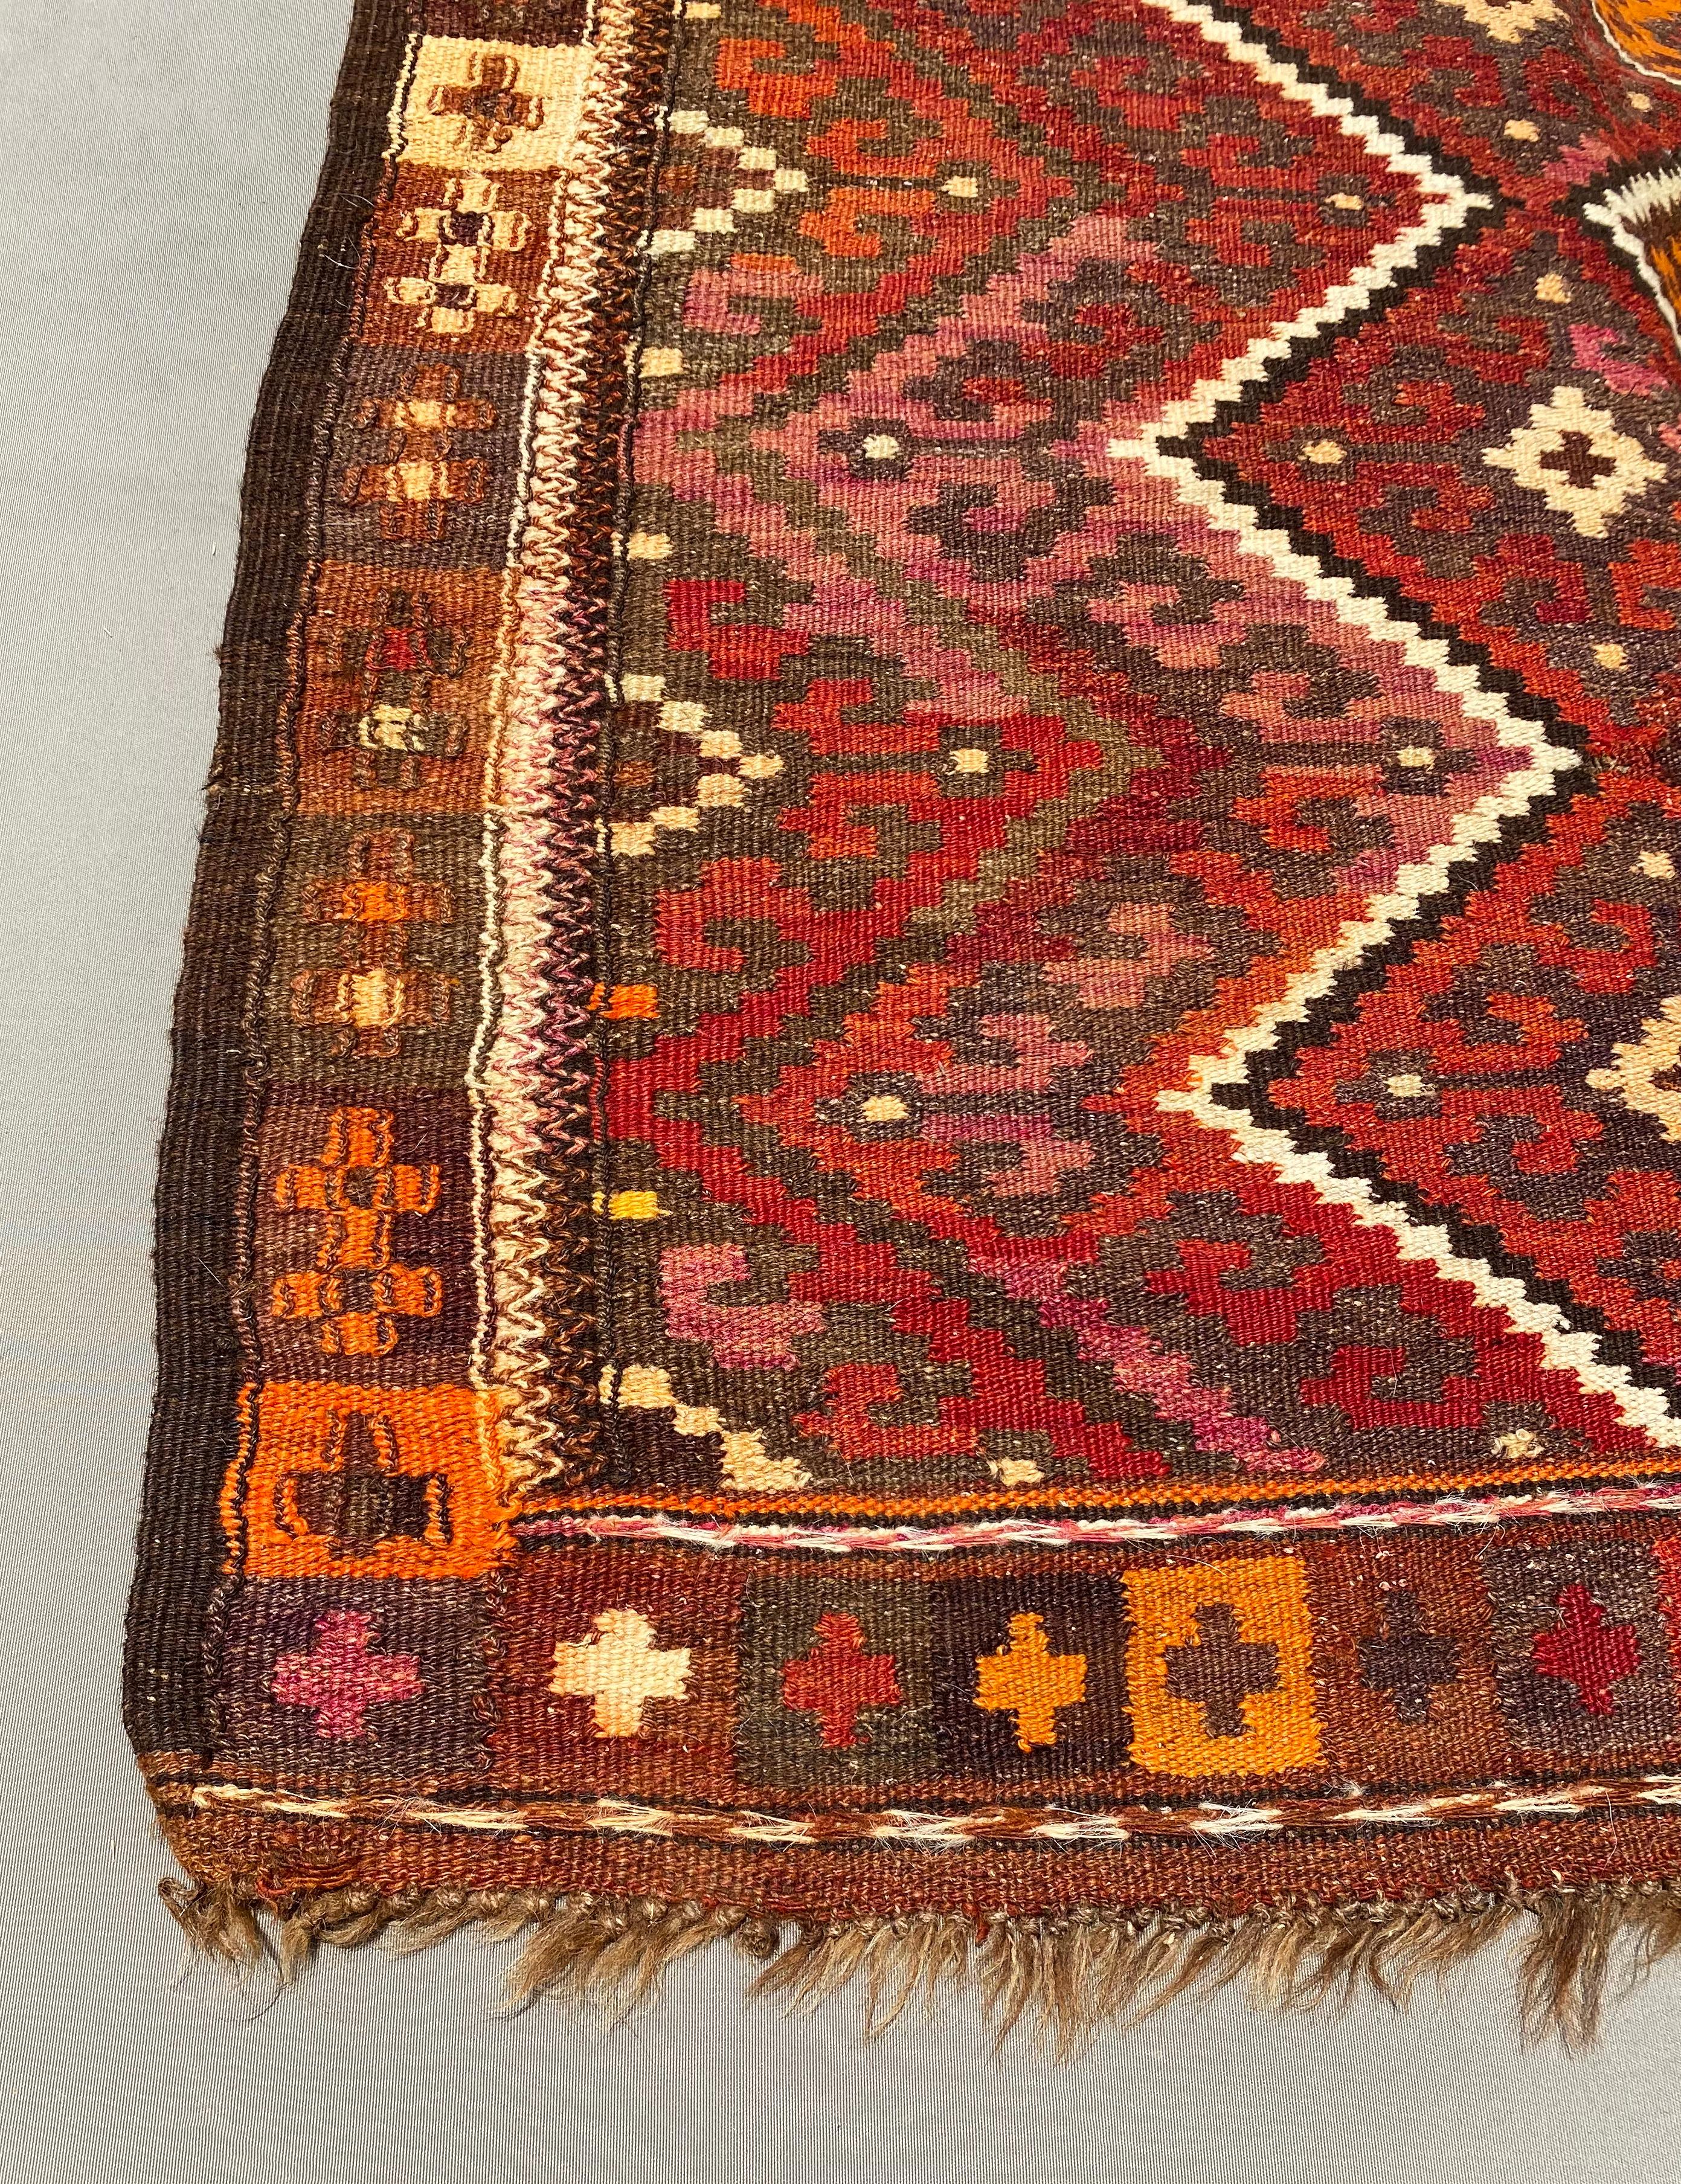 Uzbekistan Tartari Ranghi Kilim Rug from Wool, Early 20th Century For Sale 2